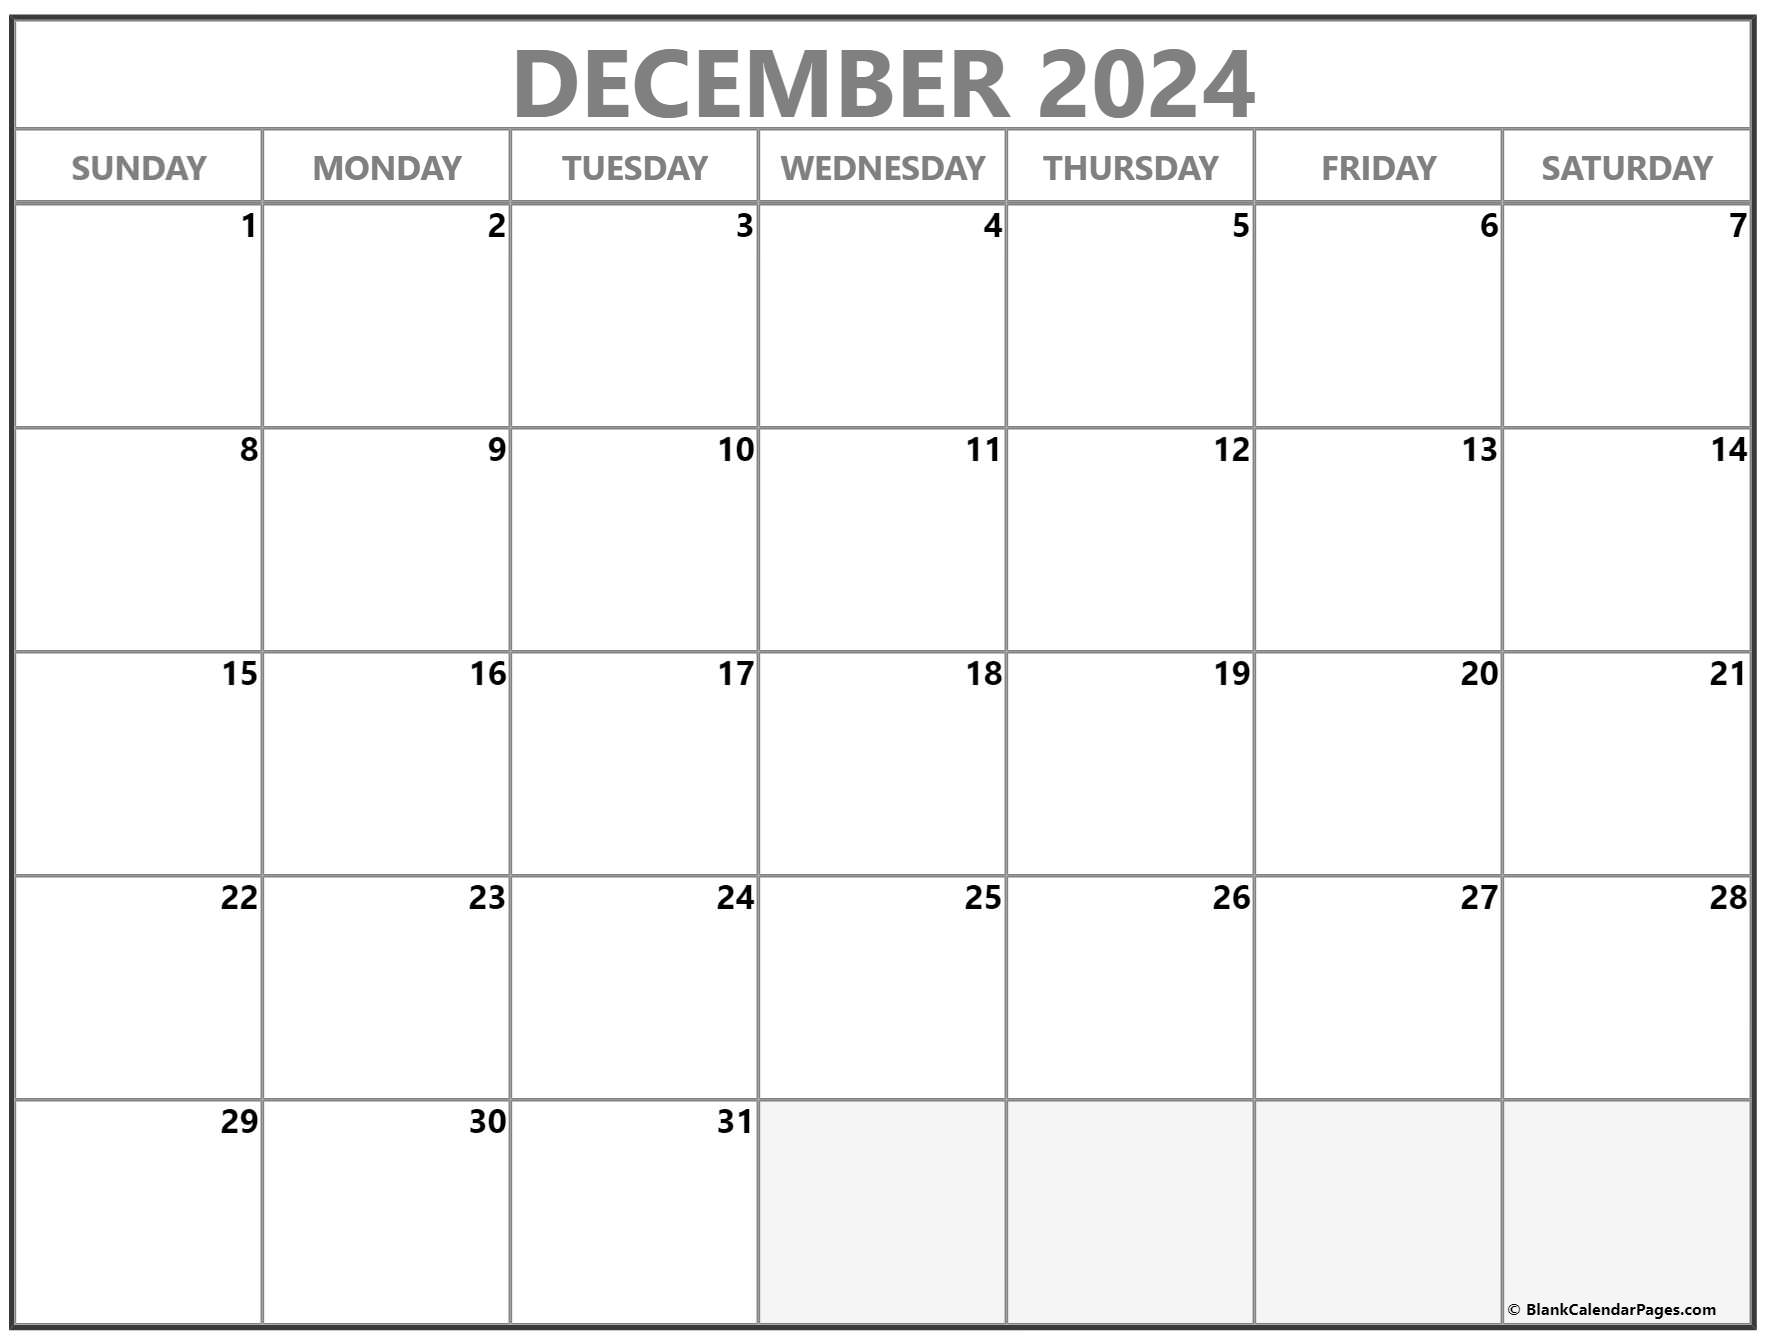 december-2022-calendar-free-printable-calendar-20-december-2022